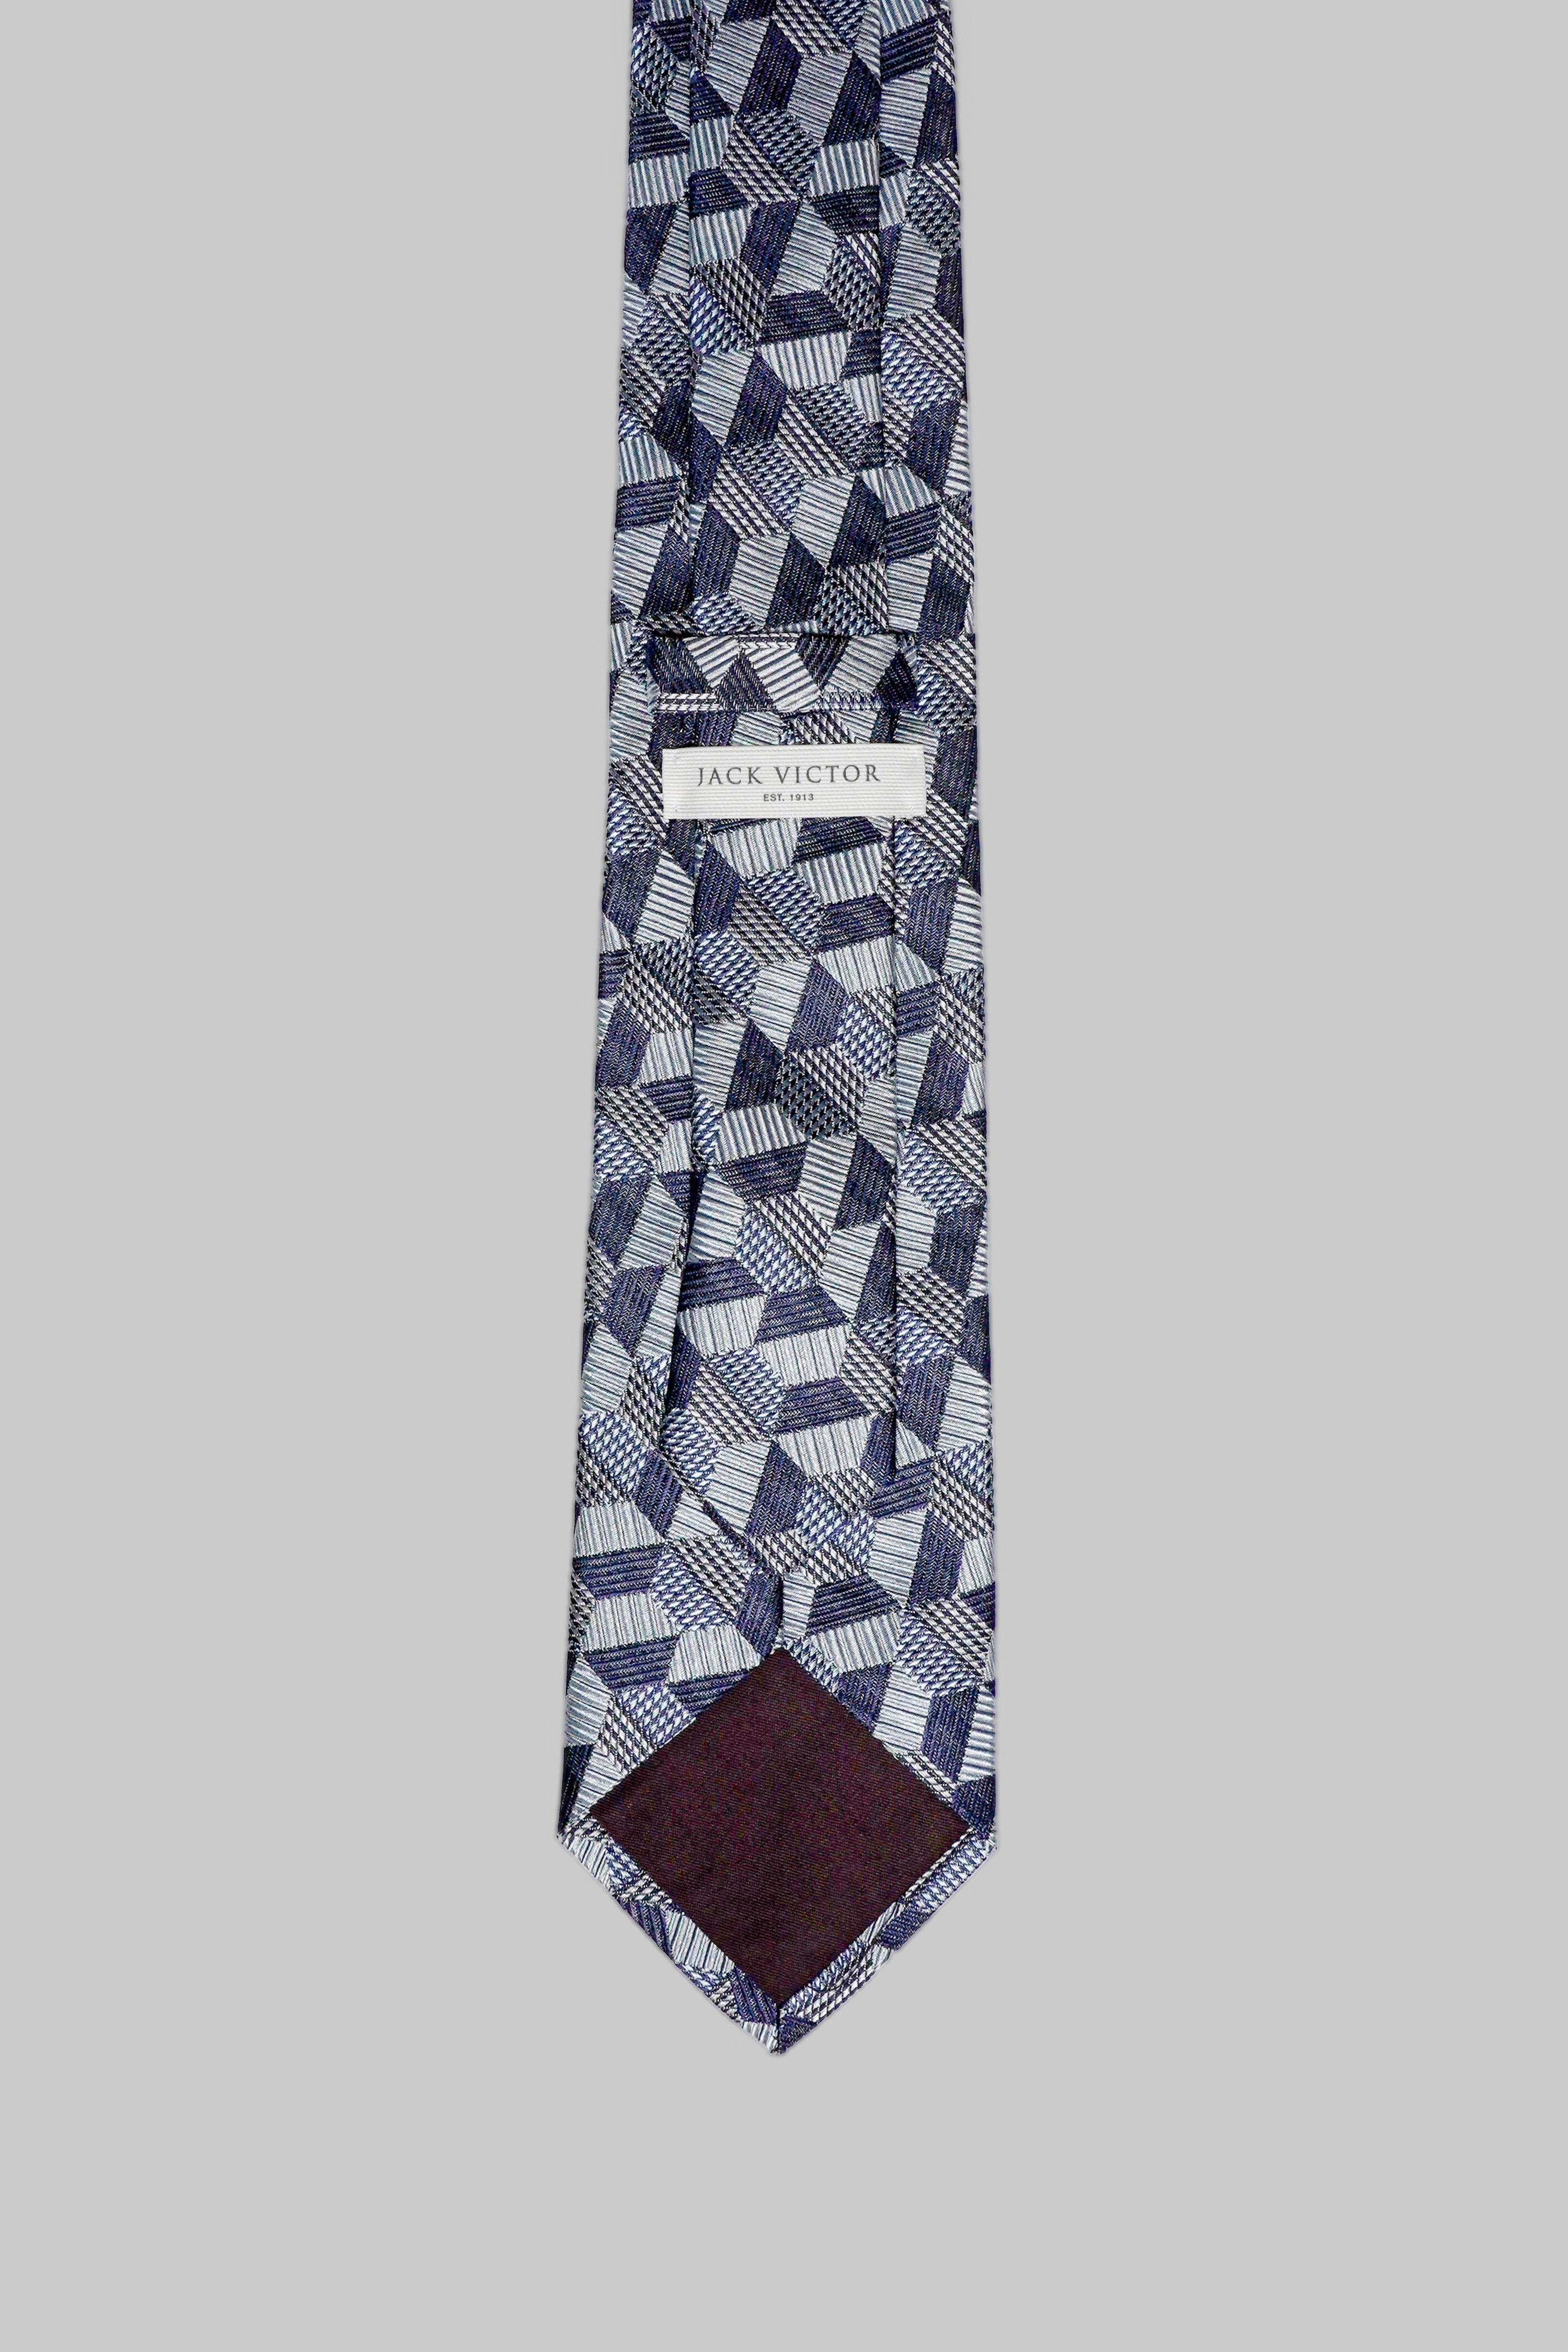 Vue alternative 2 Holton cravate tissée en bleu